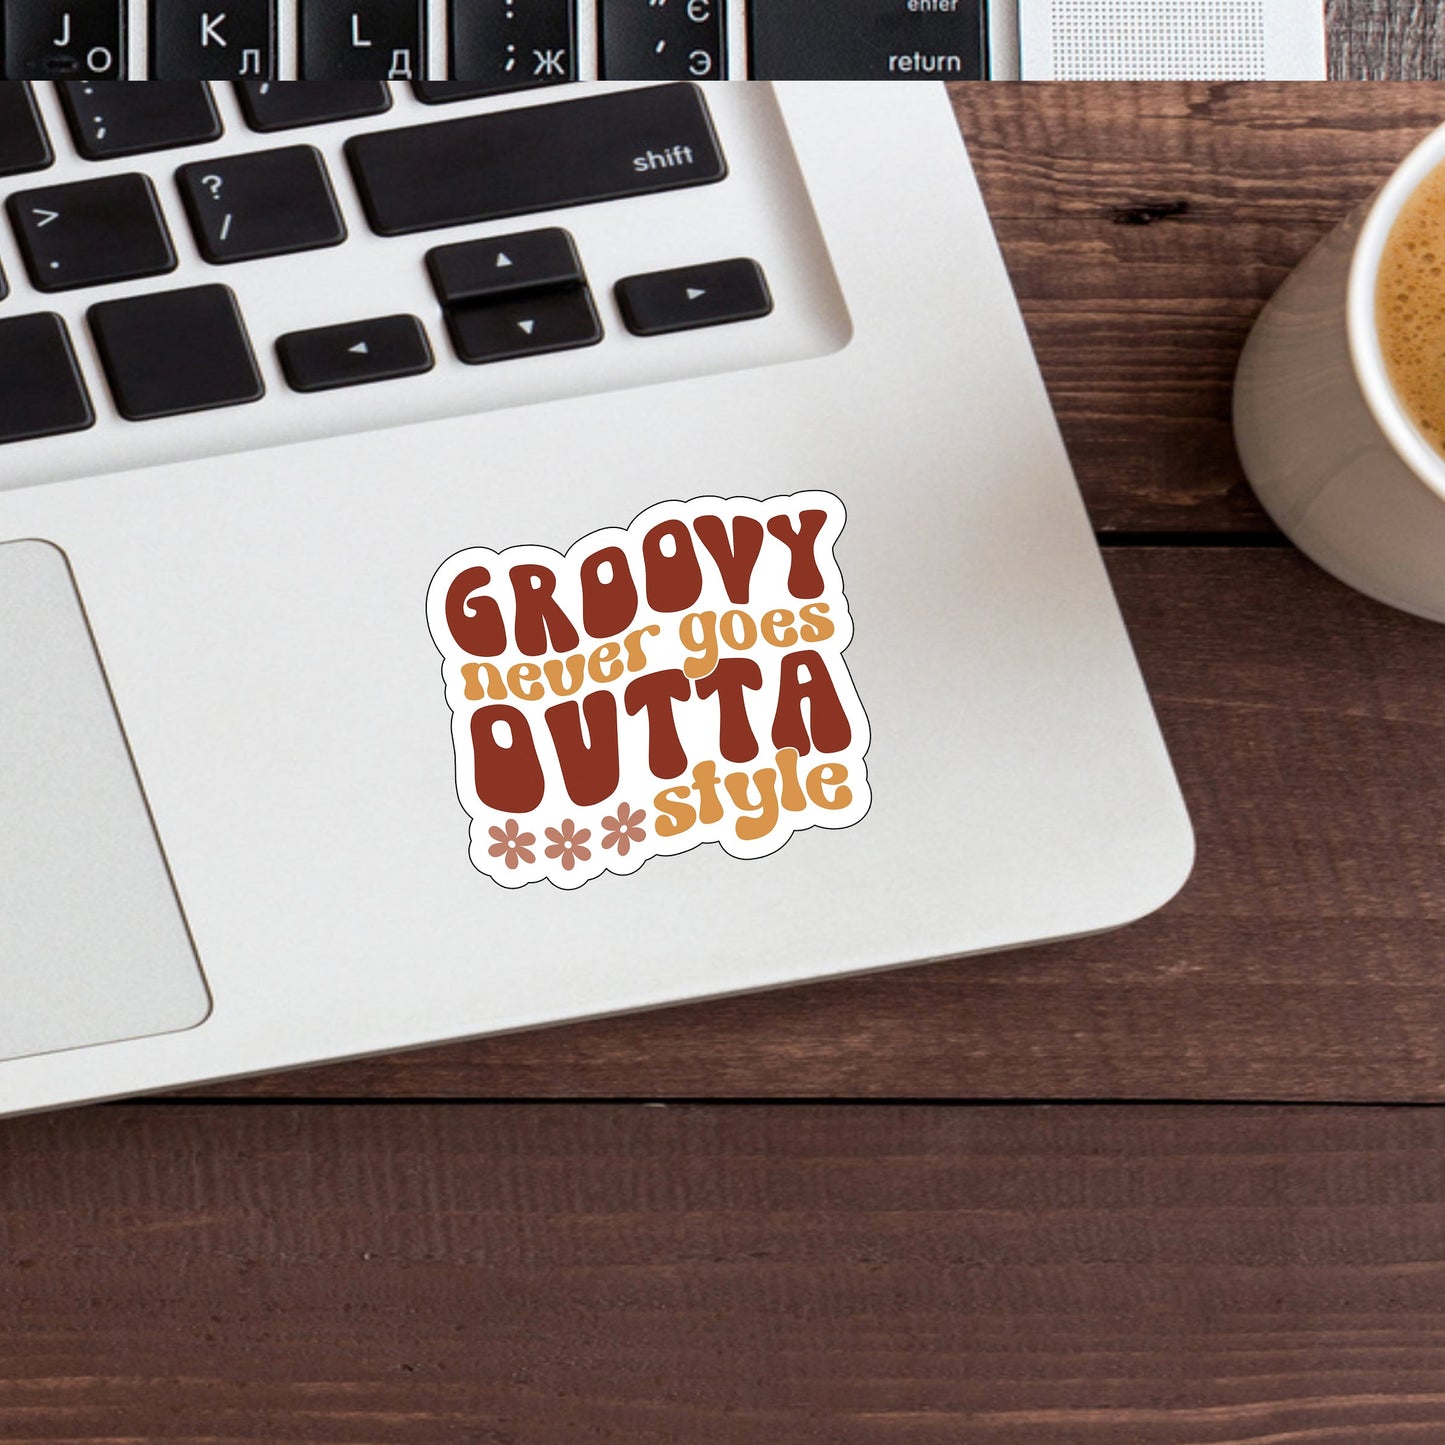 Groovy never goes outta style  Sticker,  Vinyl sticker, laptop sticker, Tablet sticker